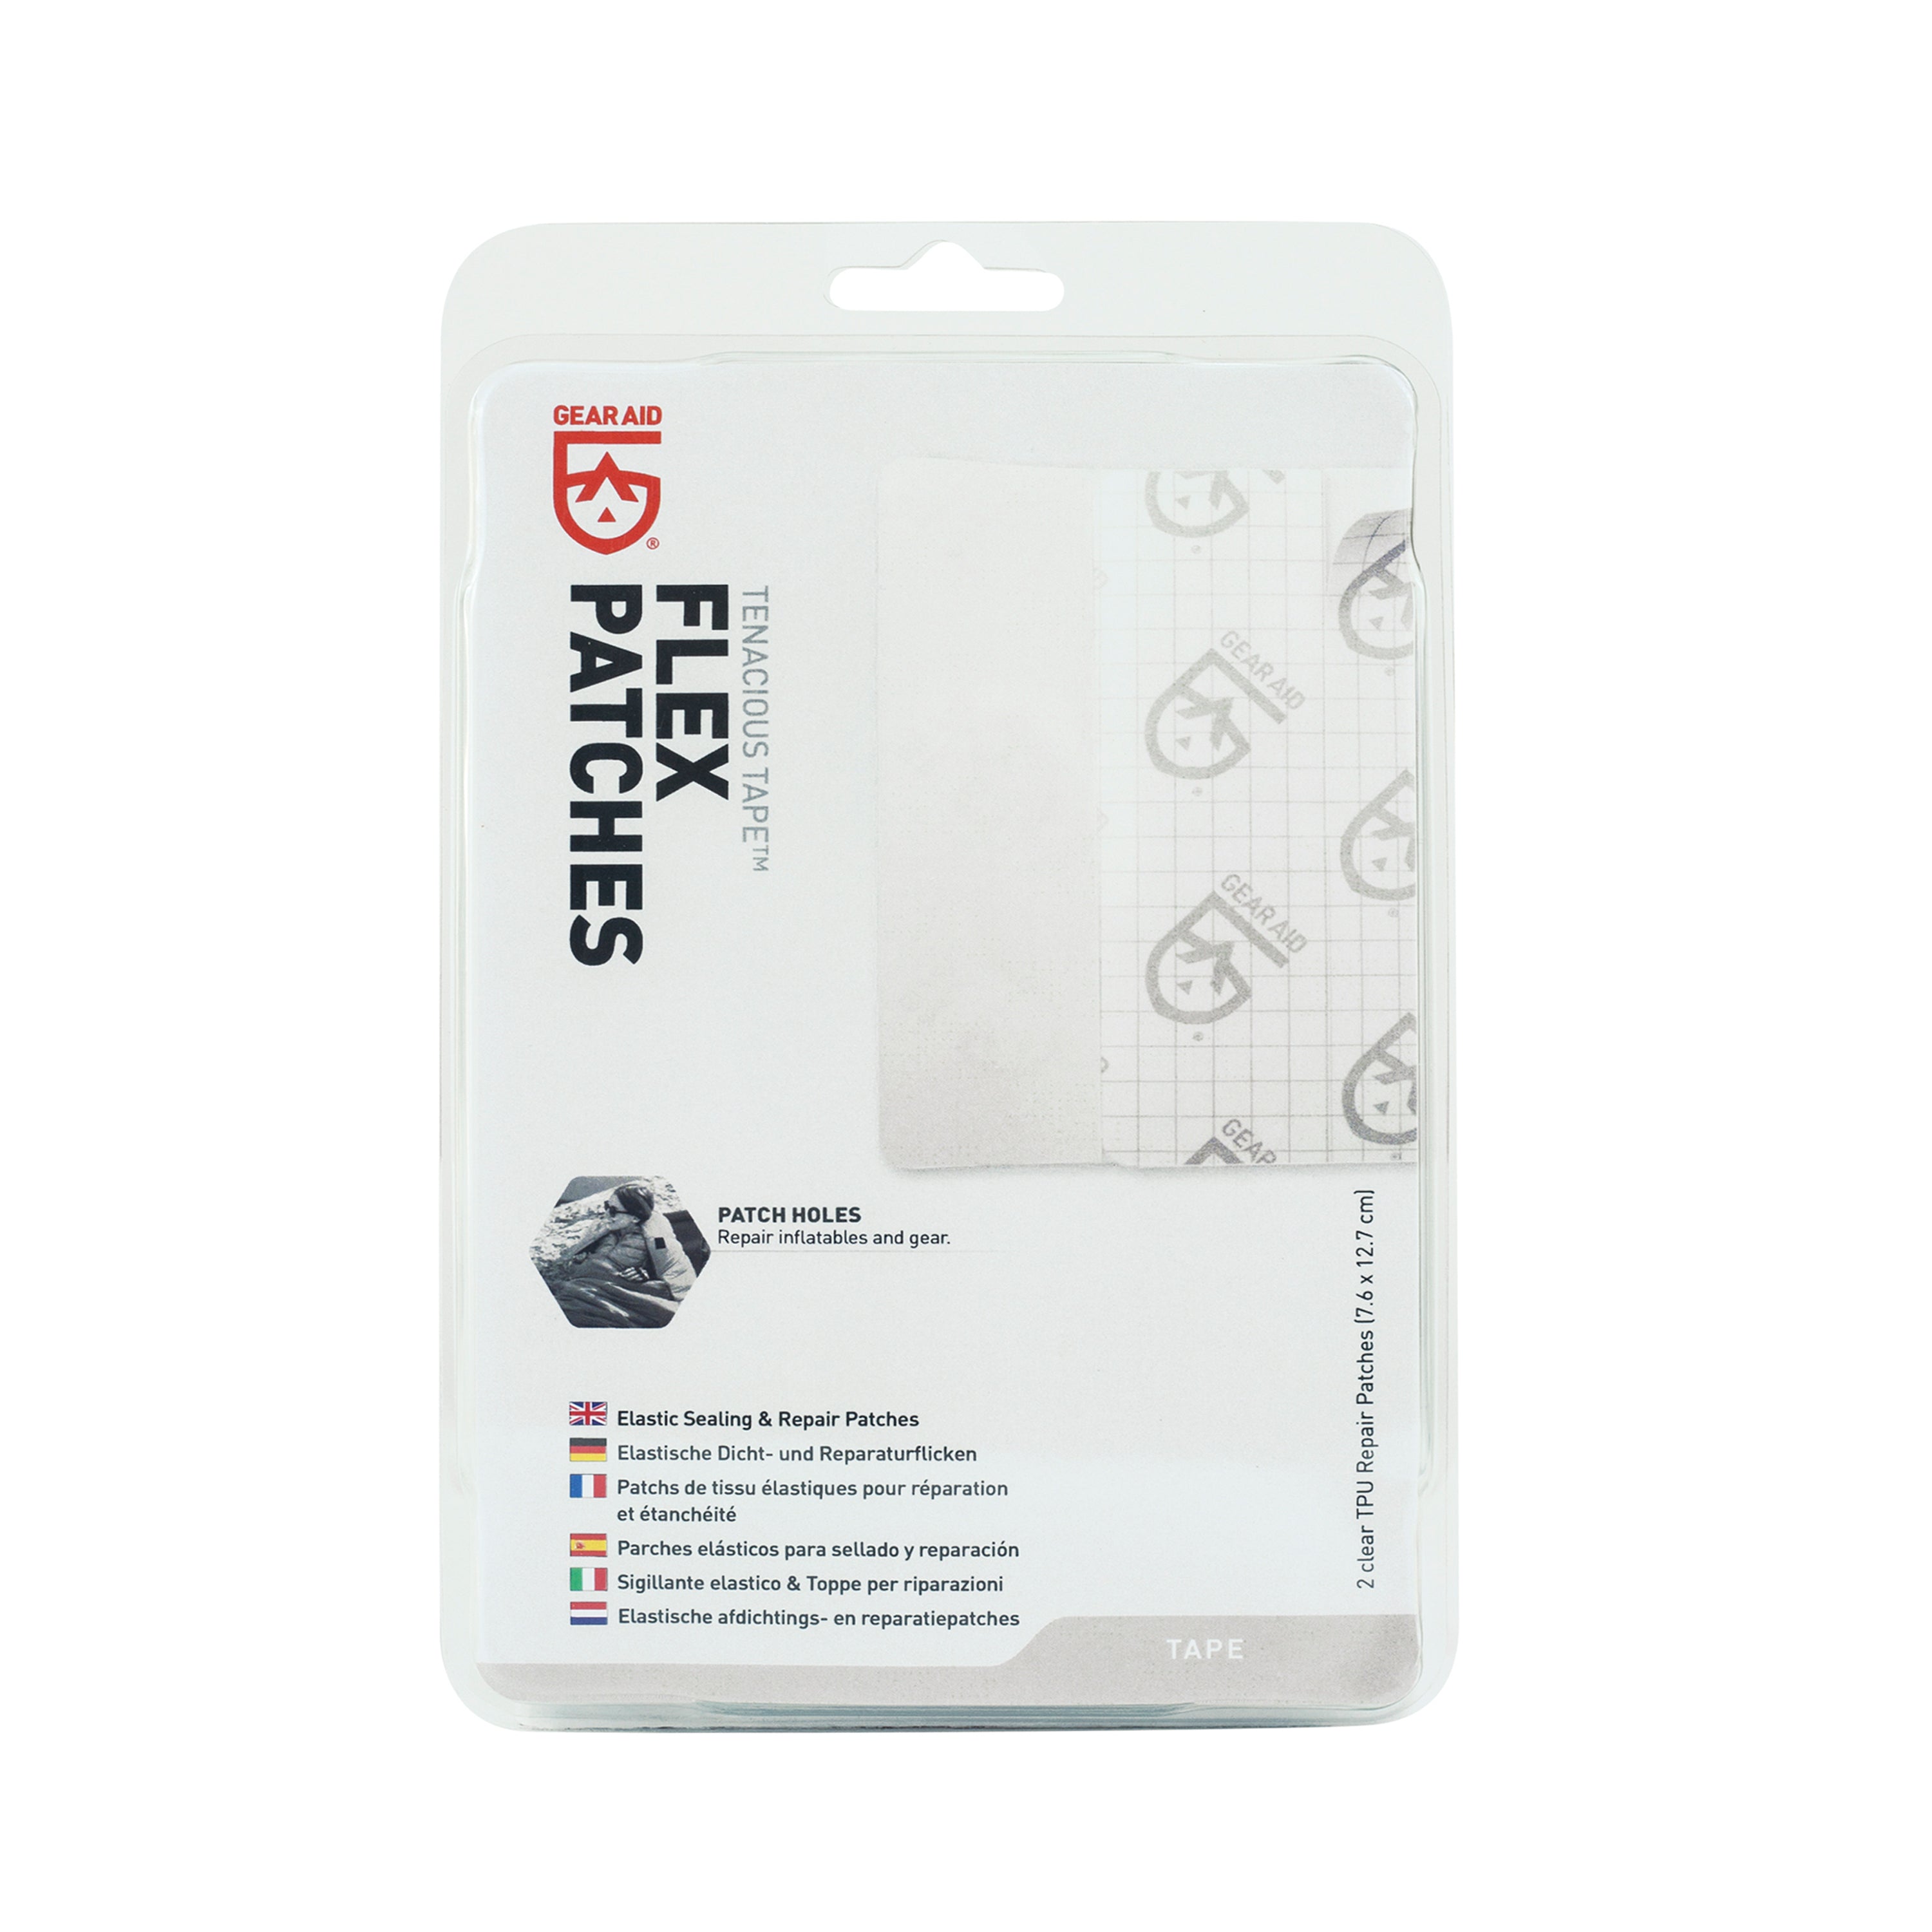 Gear Aid Tenacious Tape® Mini Repair Patches